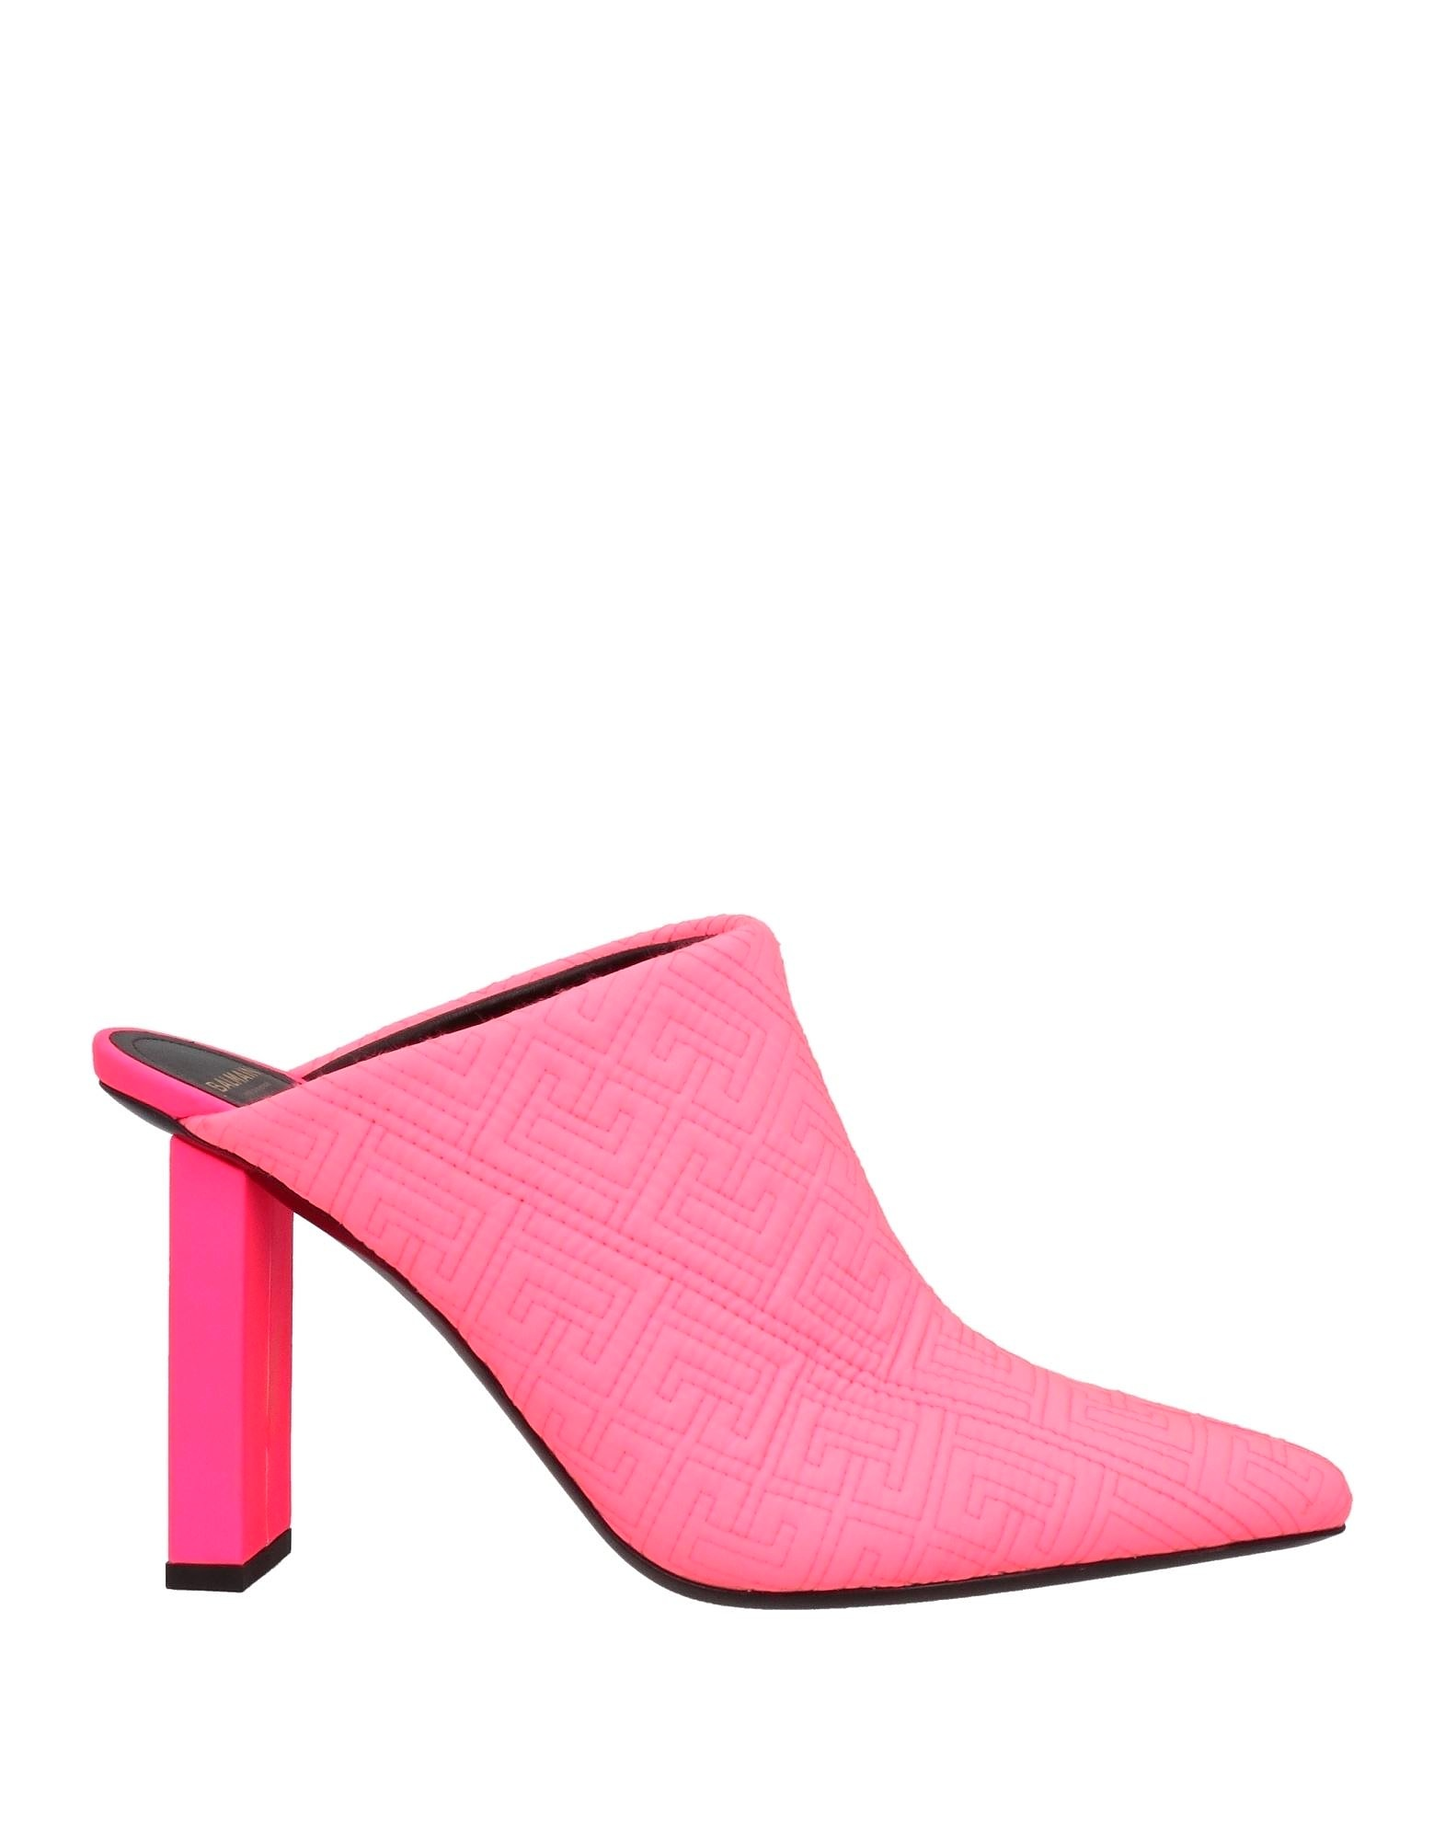 Parioli Shoes - BALMAIN Mules - Pink